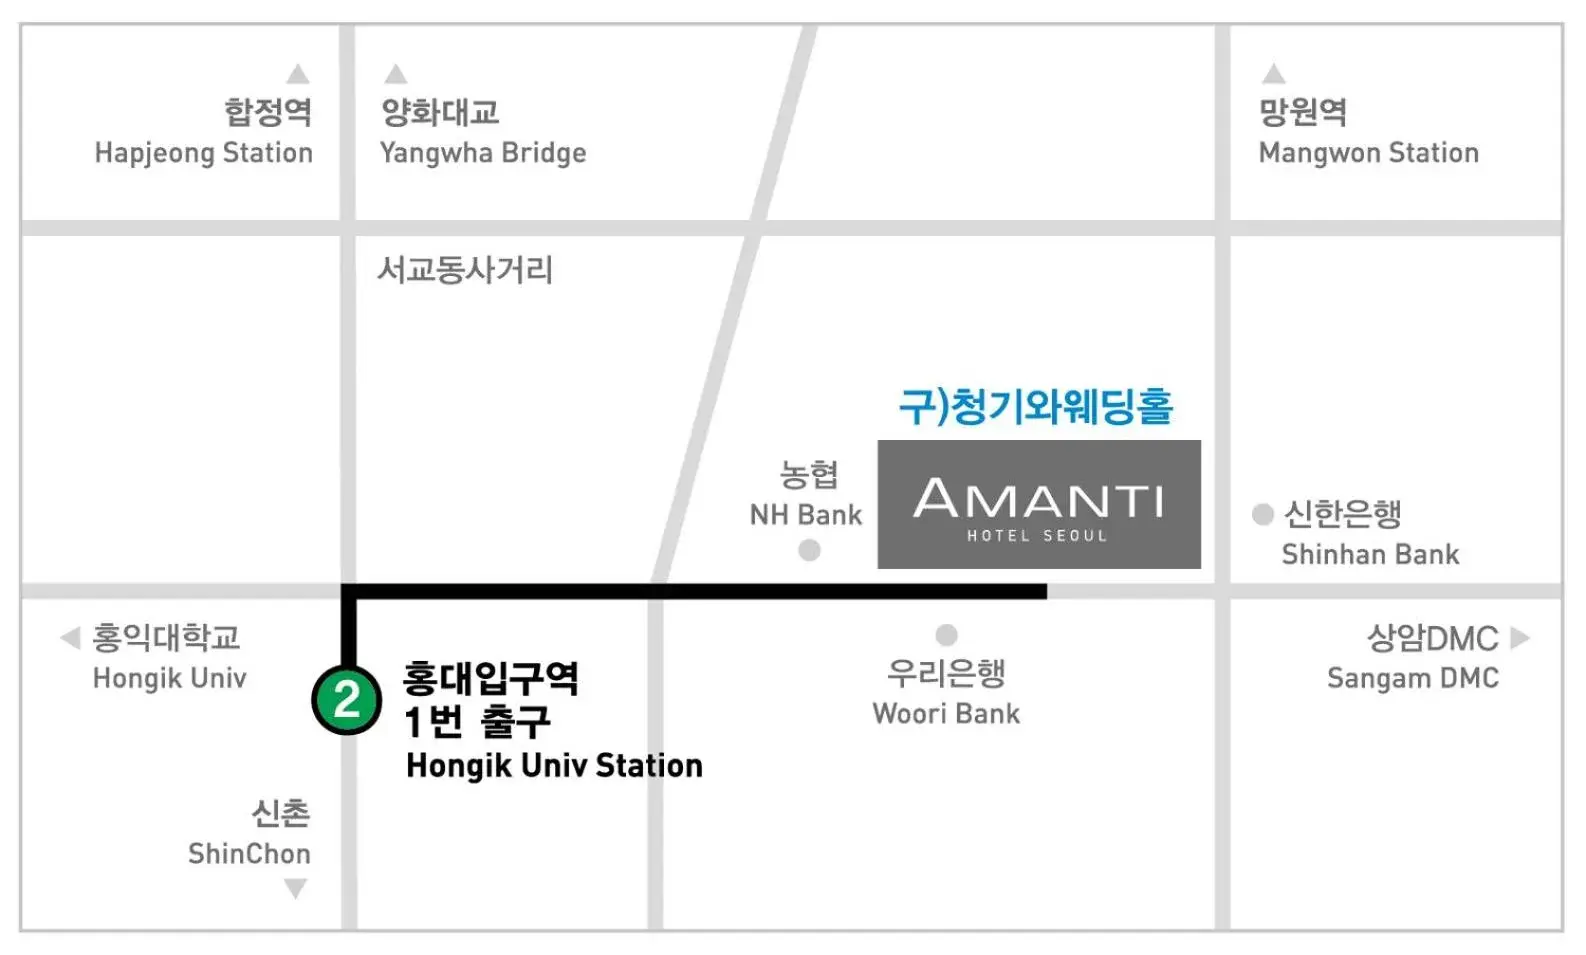 Floor Plan in Amanti Hotel Seoul